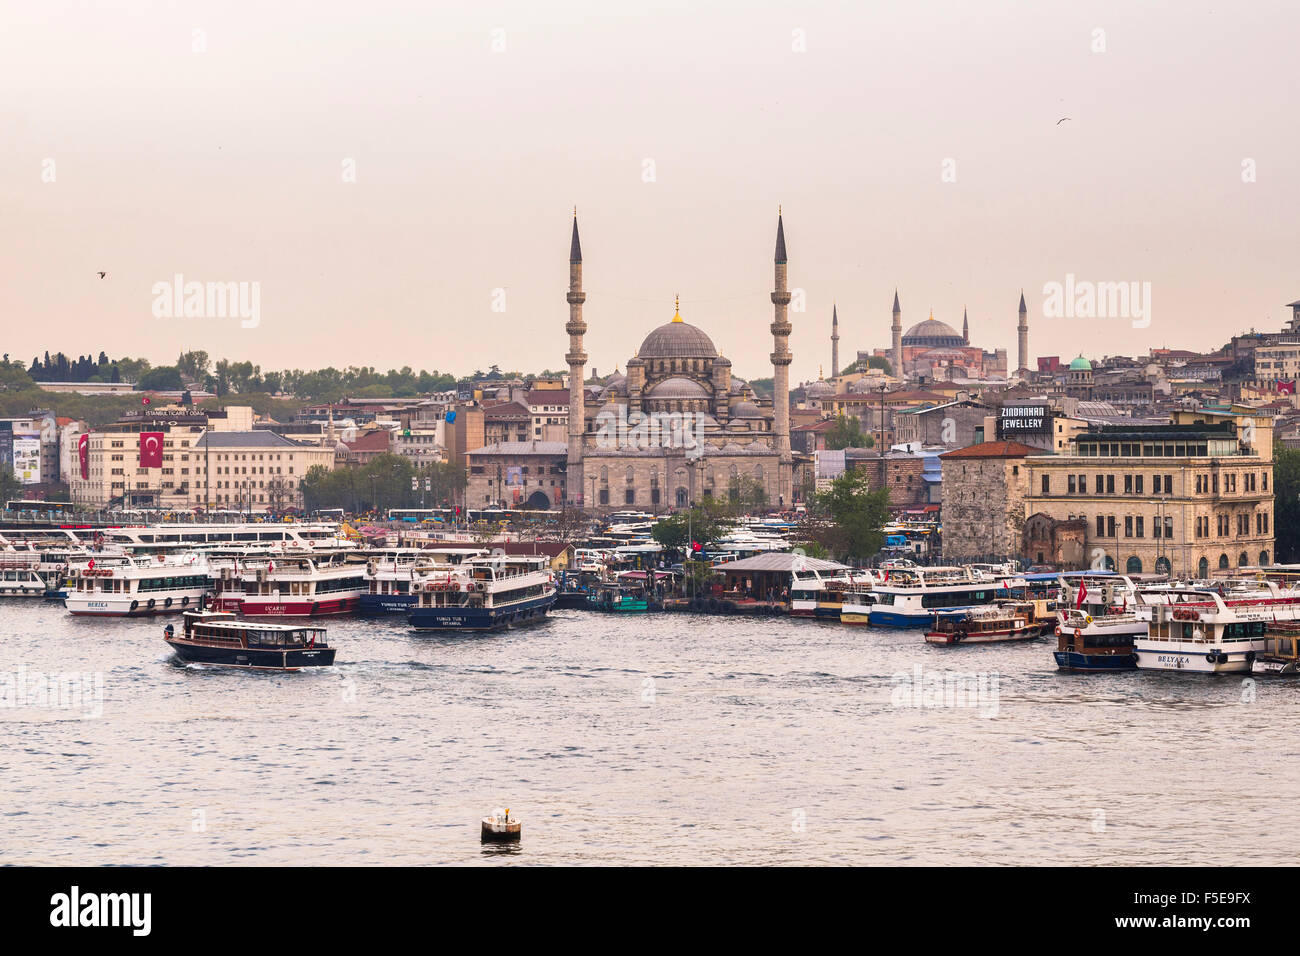 New Mosque (Yeni Cami) with Hagia Sophia (Aya Sofya) behind seen across the Golden Horn, Istanbul, Turkey, Europe Stock Photo